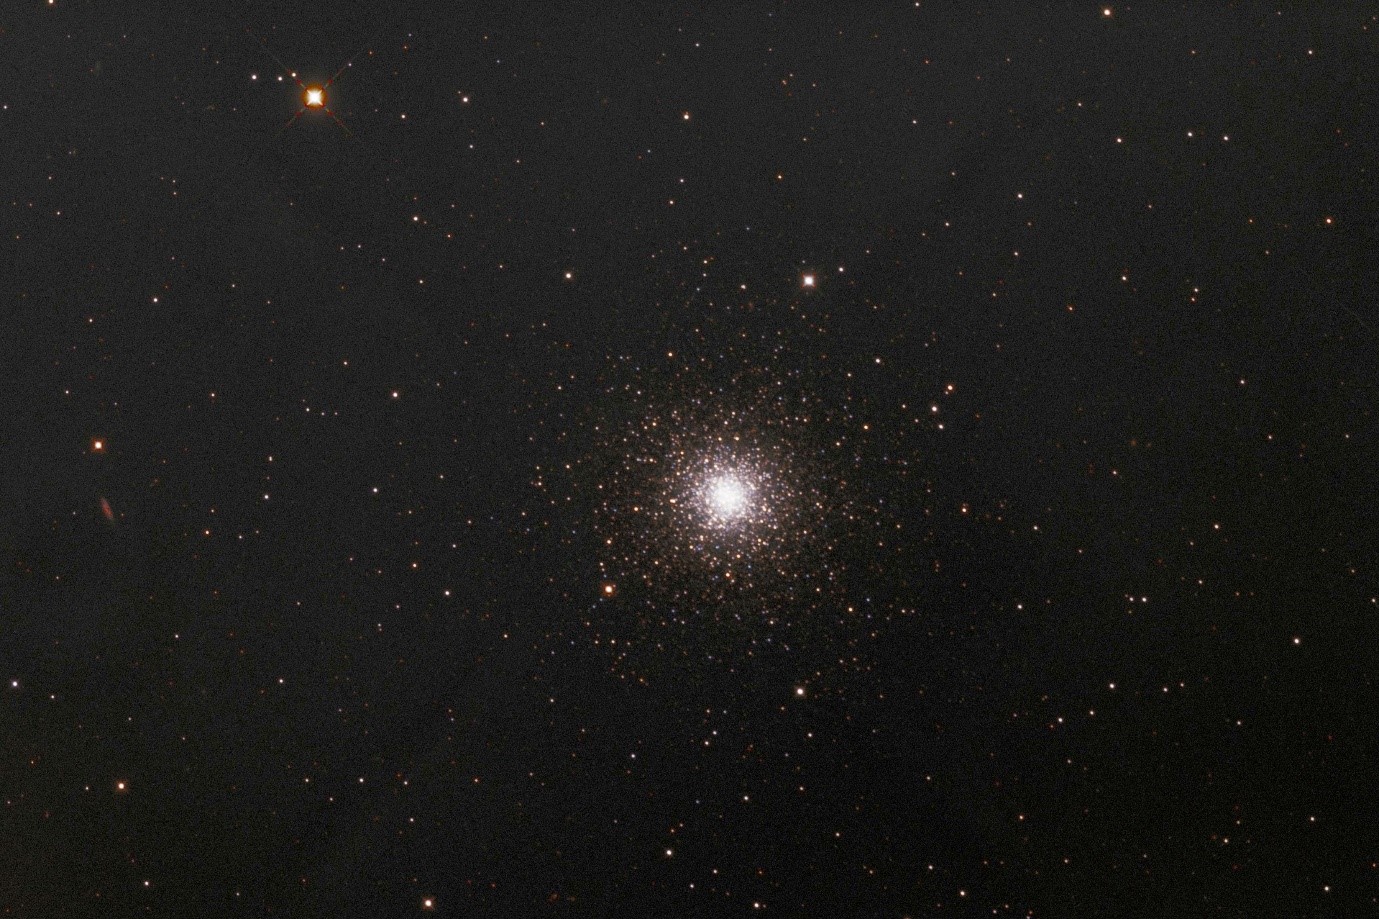 Image of Messier 3, a globular cluster of stars